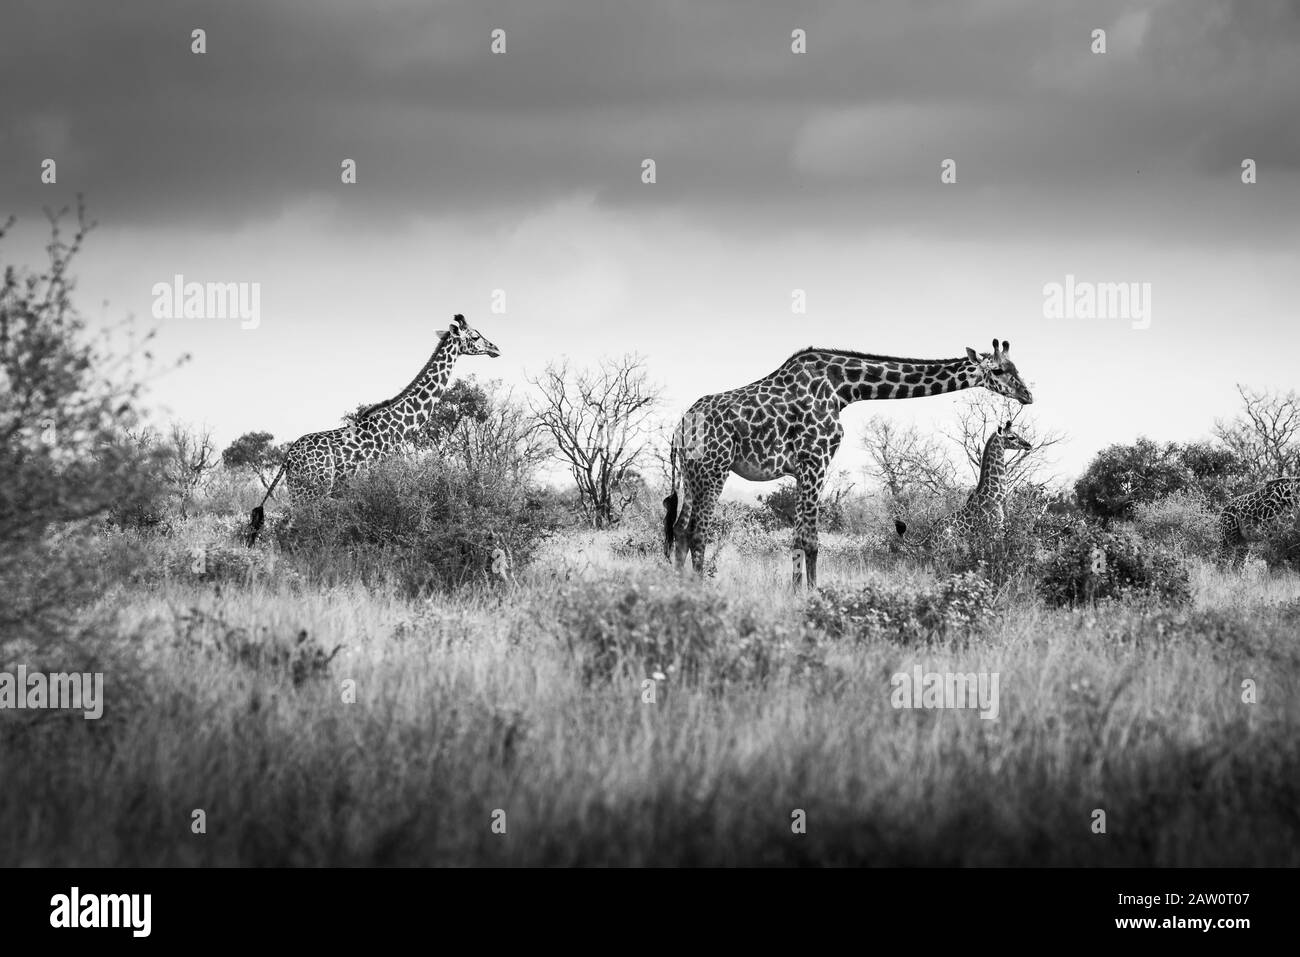 giraffes in the savanna, safari in Kenya, Africa, family baby Uganda, Tanzania Botswana hunting elephant National park saanna safari in Stock Photo